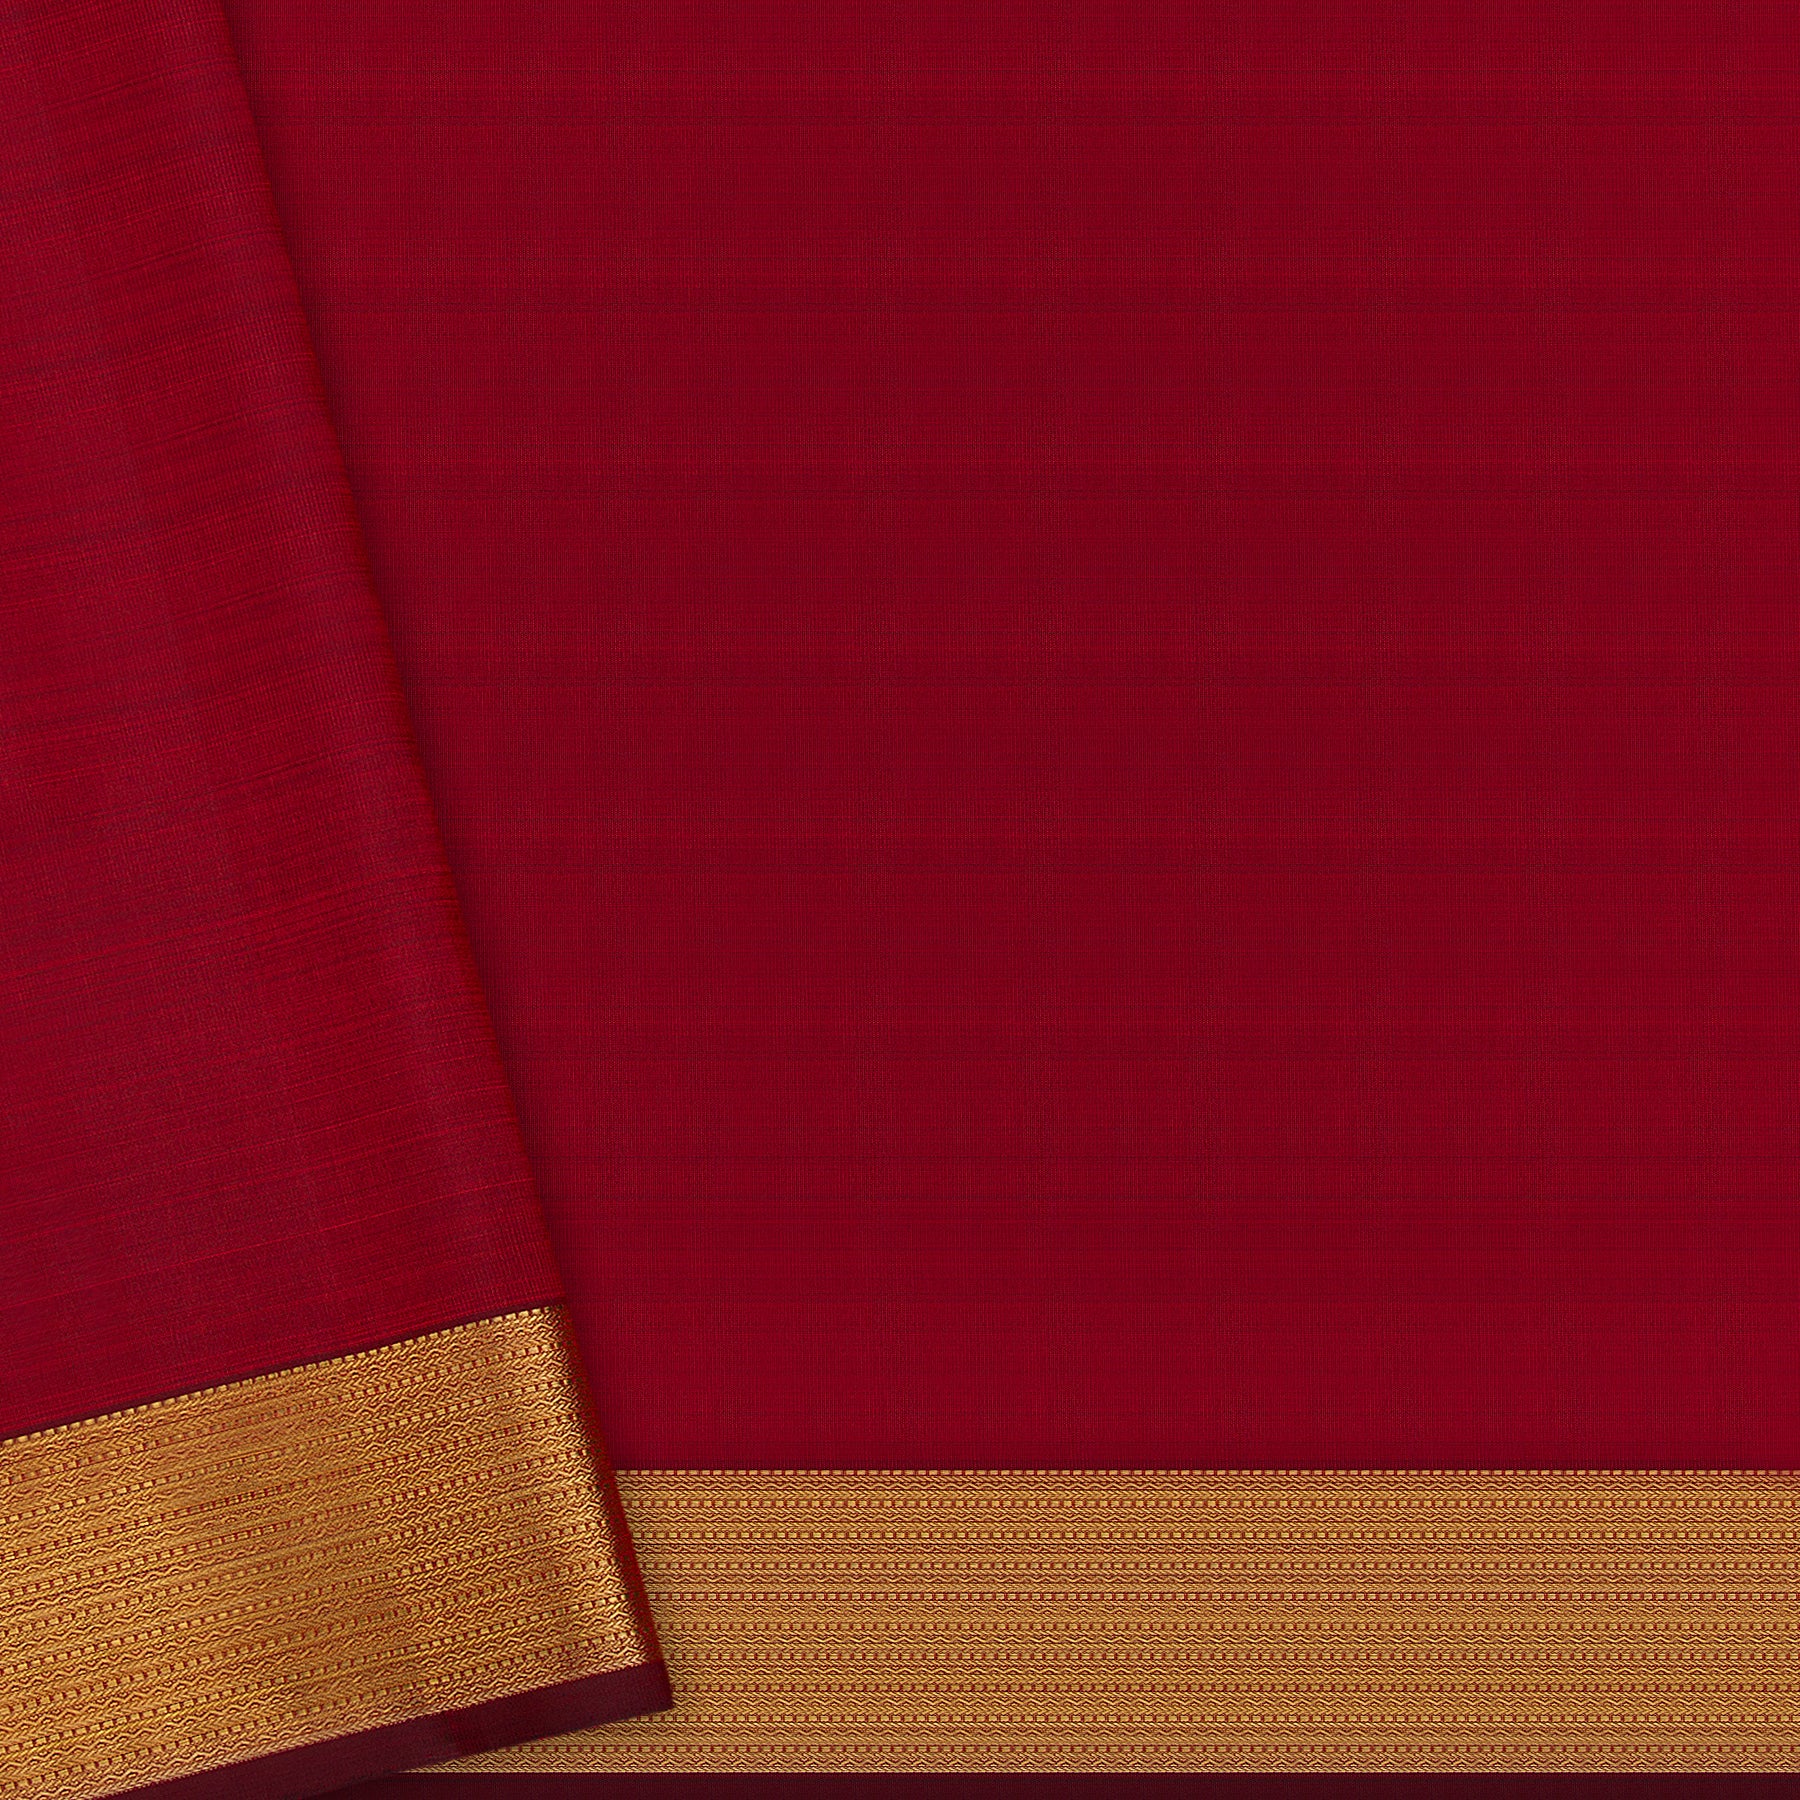 Kanakavalli Kanjivaram Silk Sari 22-599-HS001-13056 - Blouse View